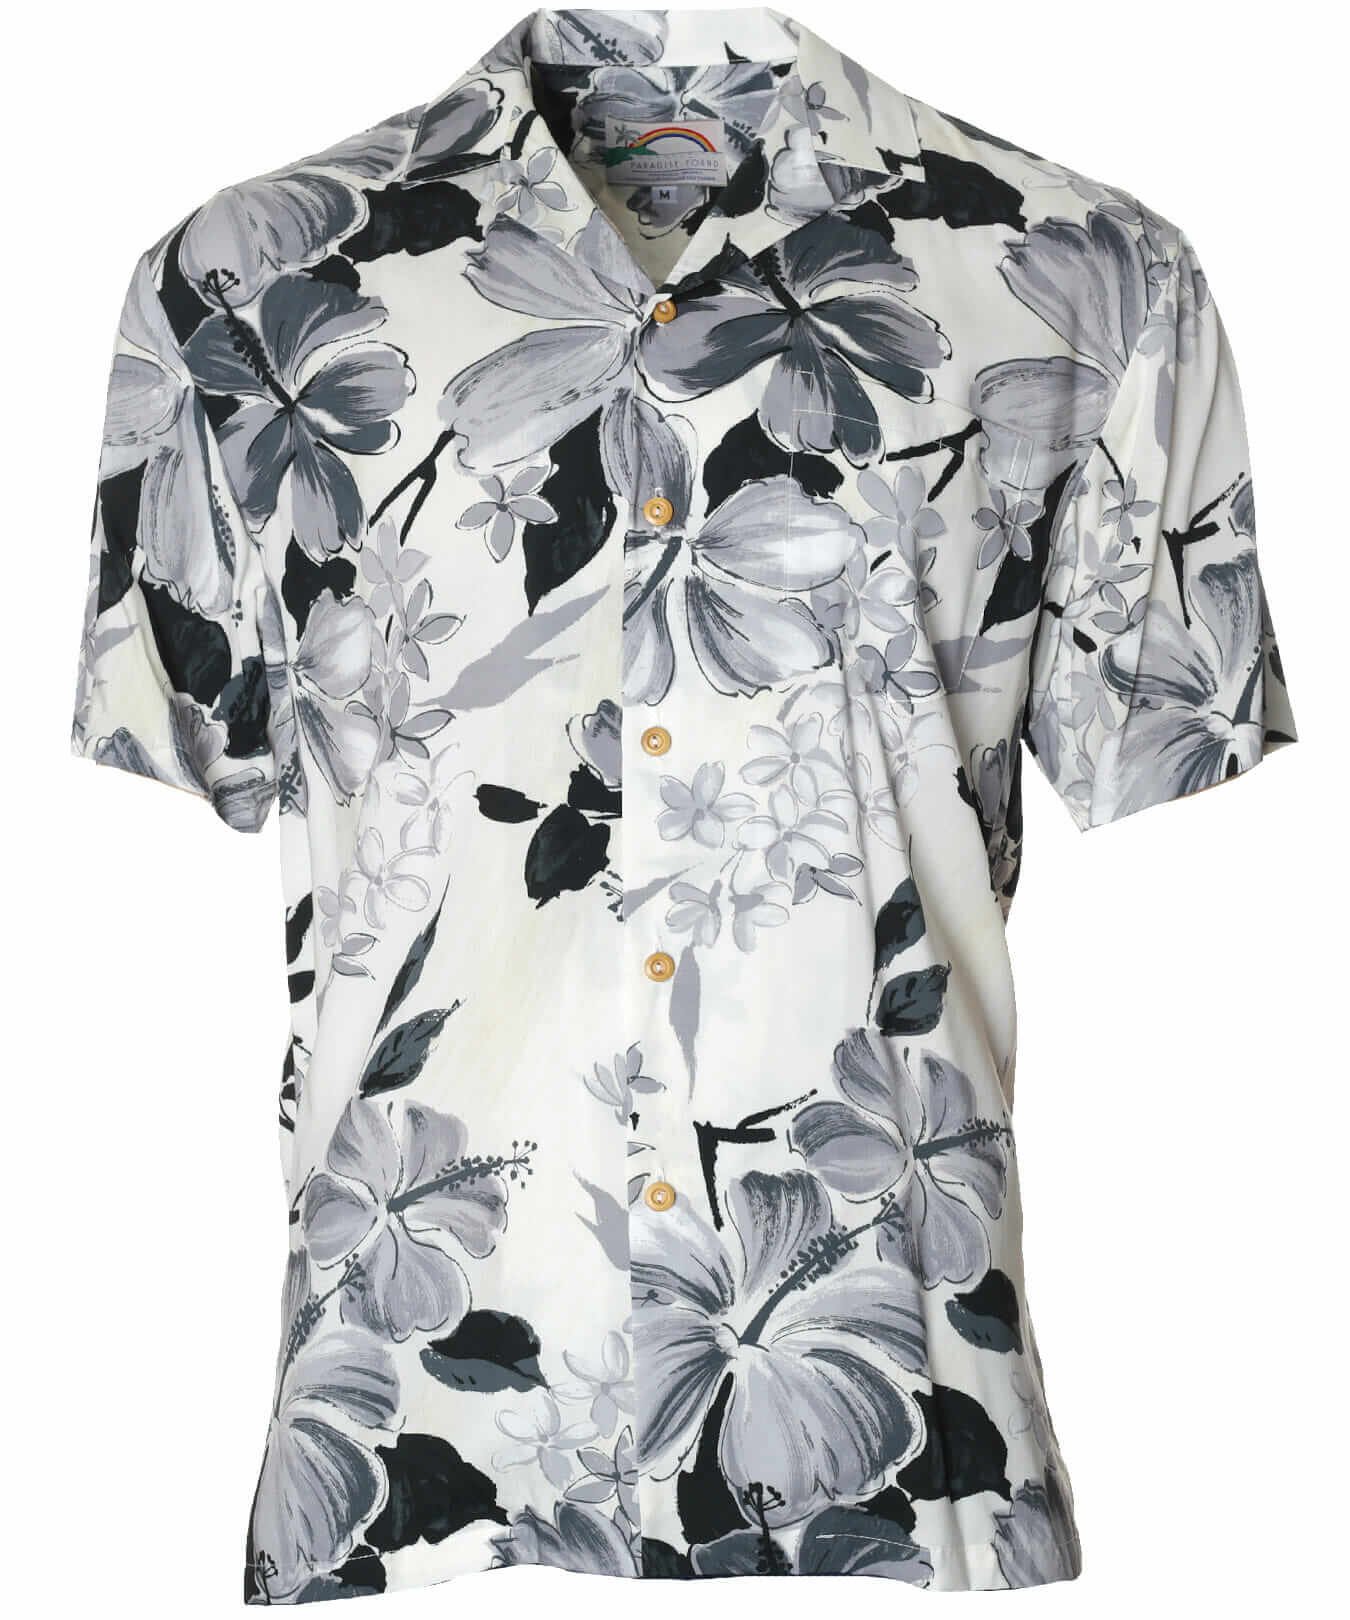 Wailuku Men's Rayon Aloha Shirt Gray